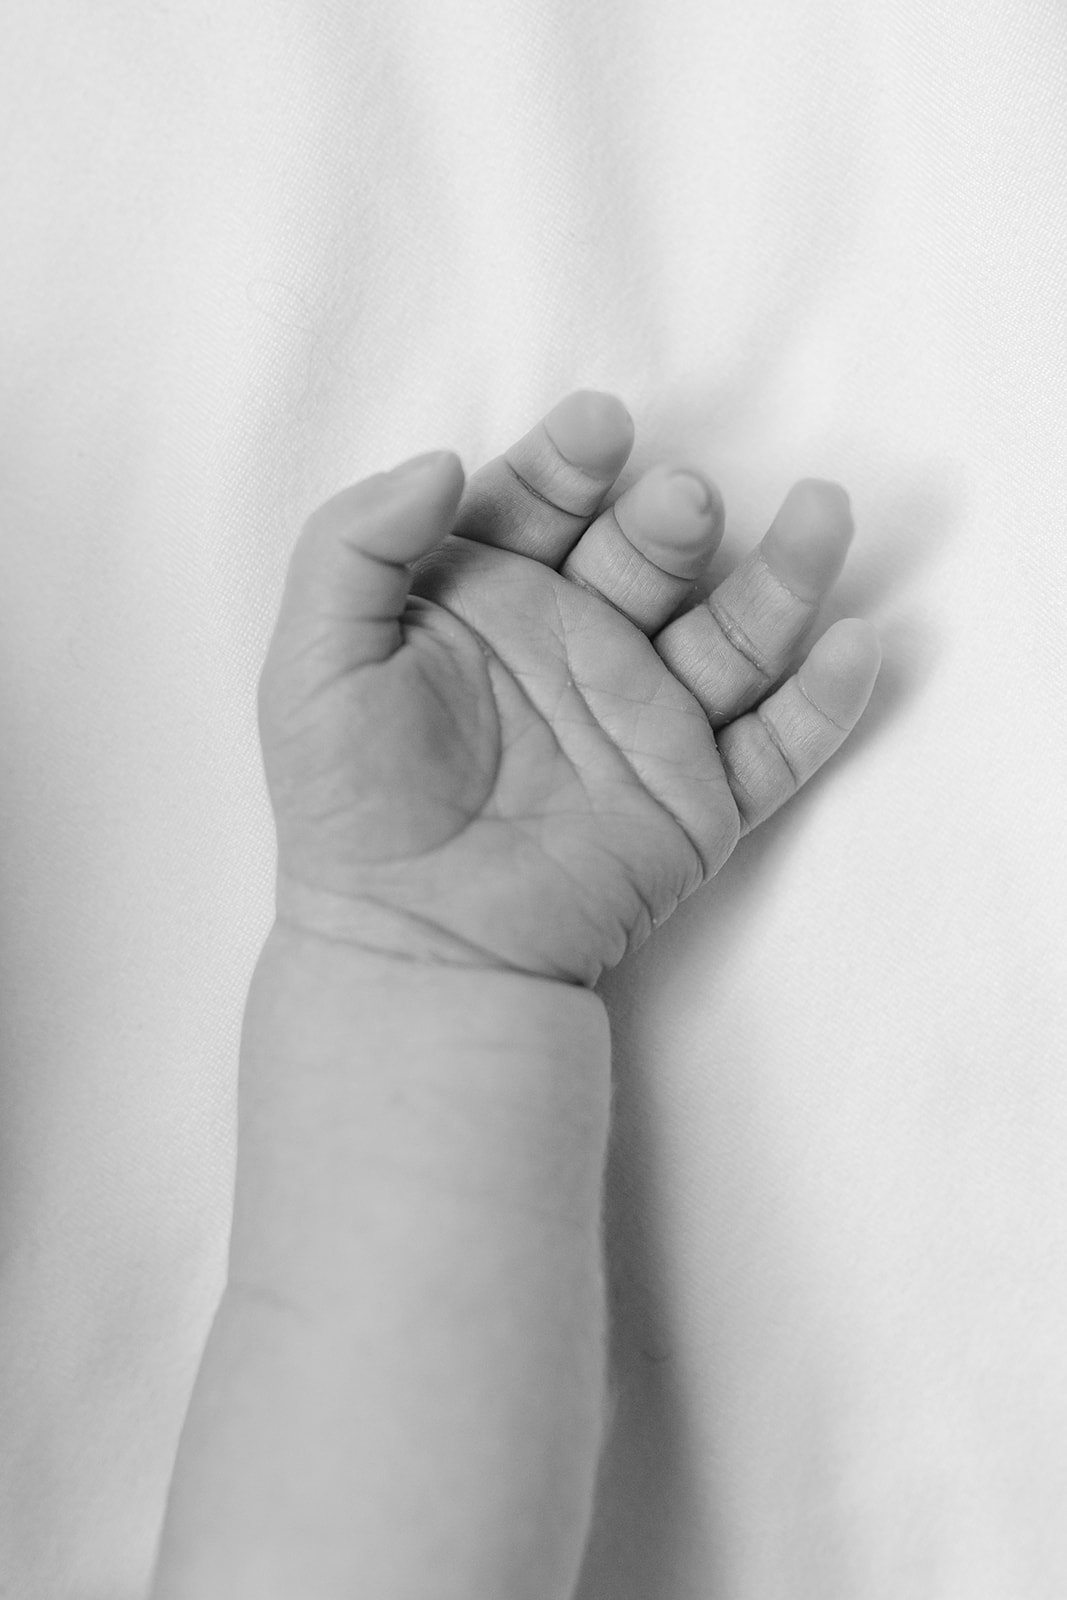 houston-newborn-photographer-kimberly-brooke-lifestlye-baby-346.jpg